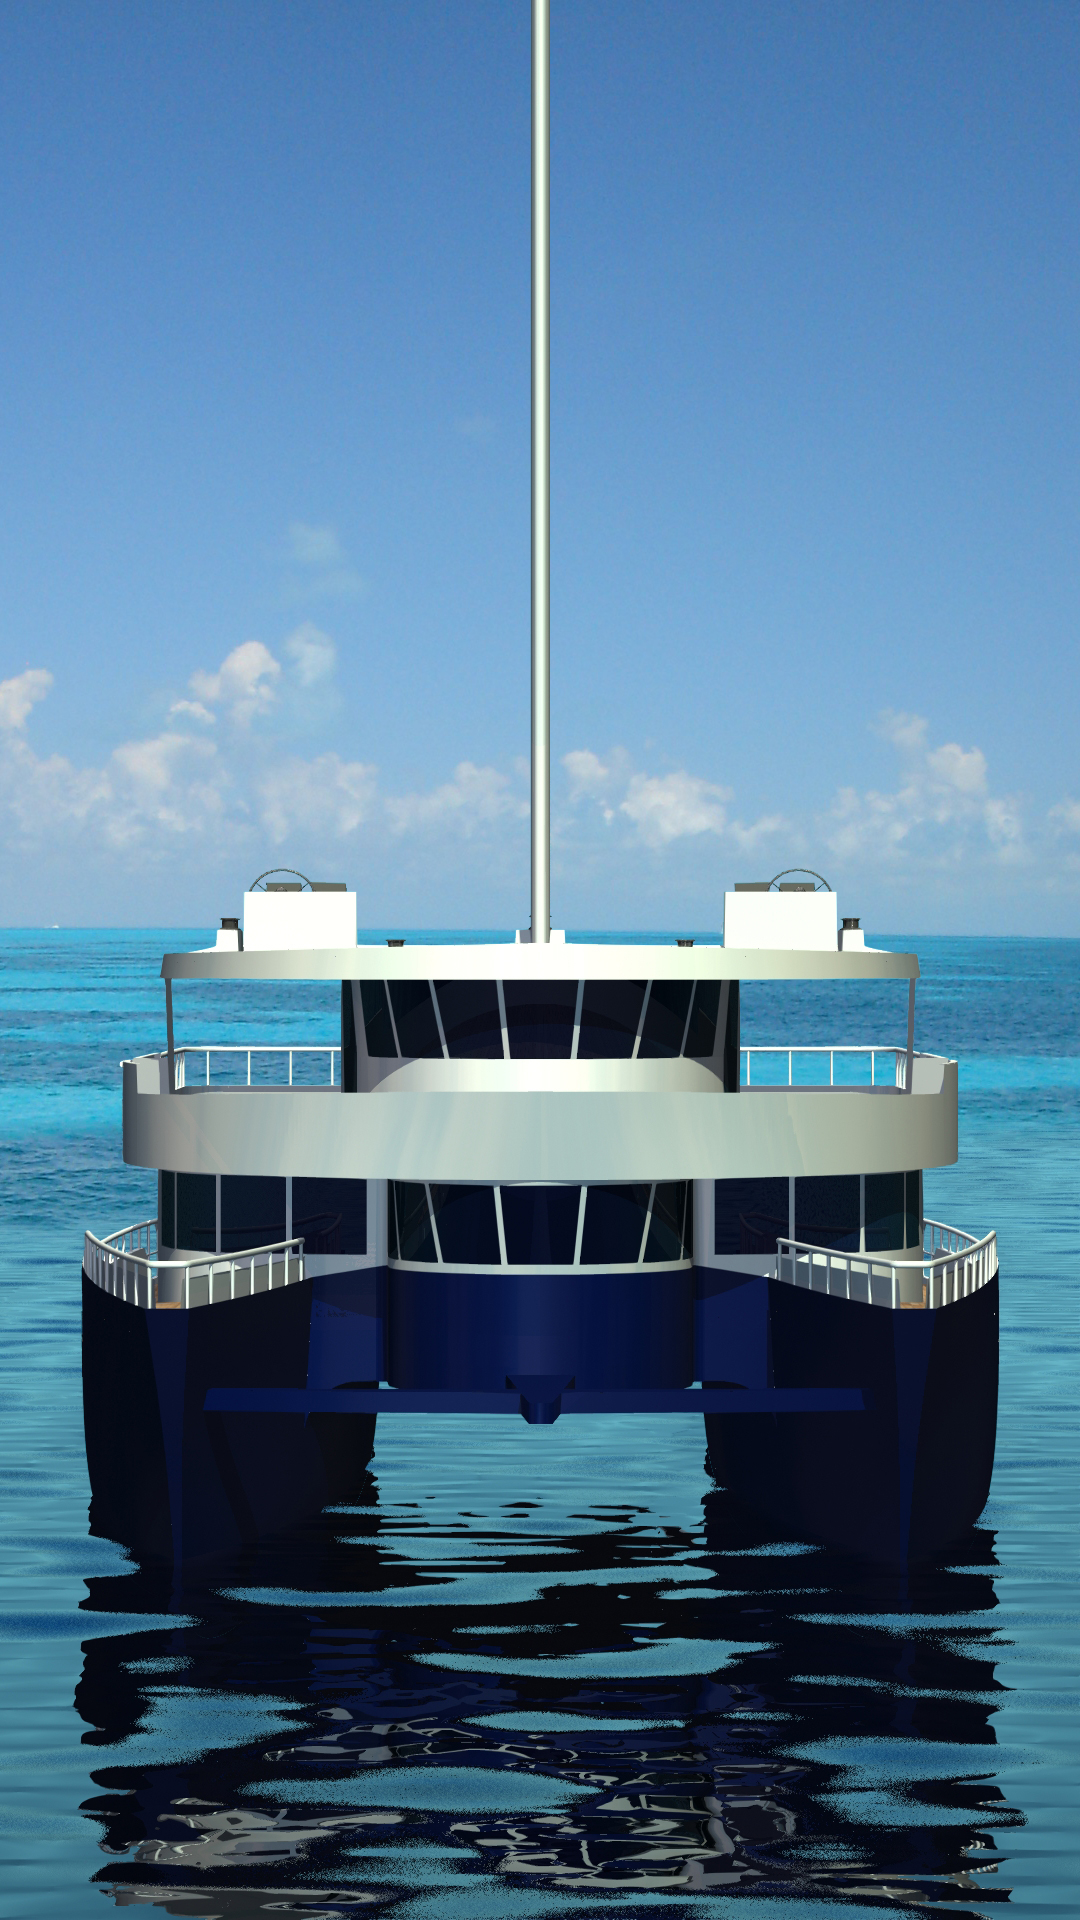 design naval Interior refitting catamaran luxury yacht